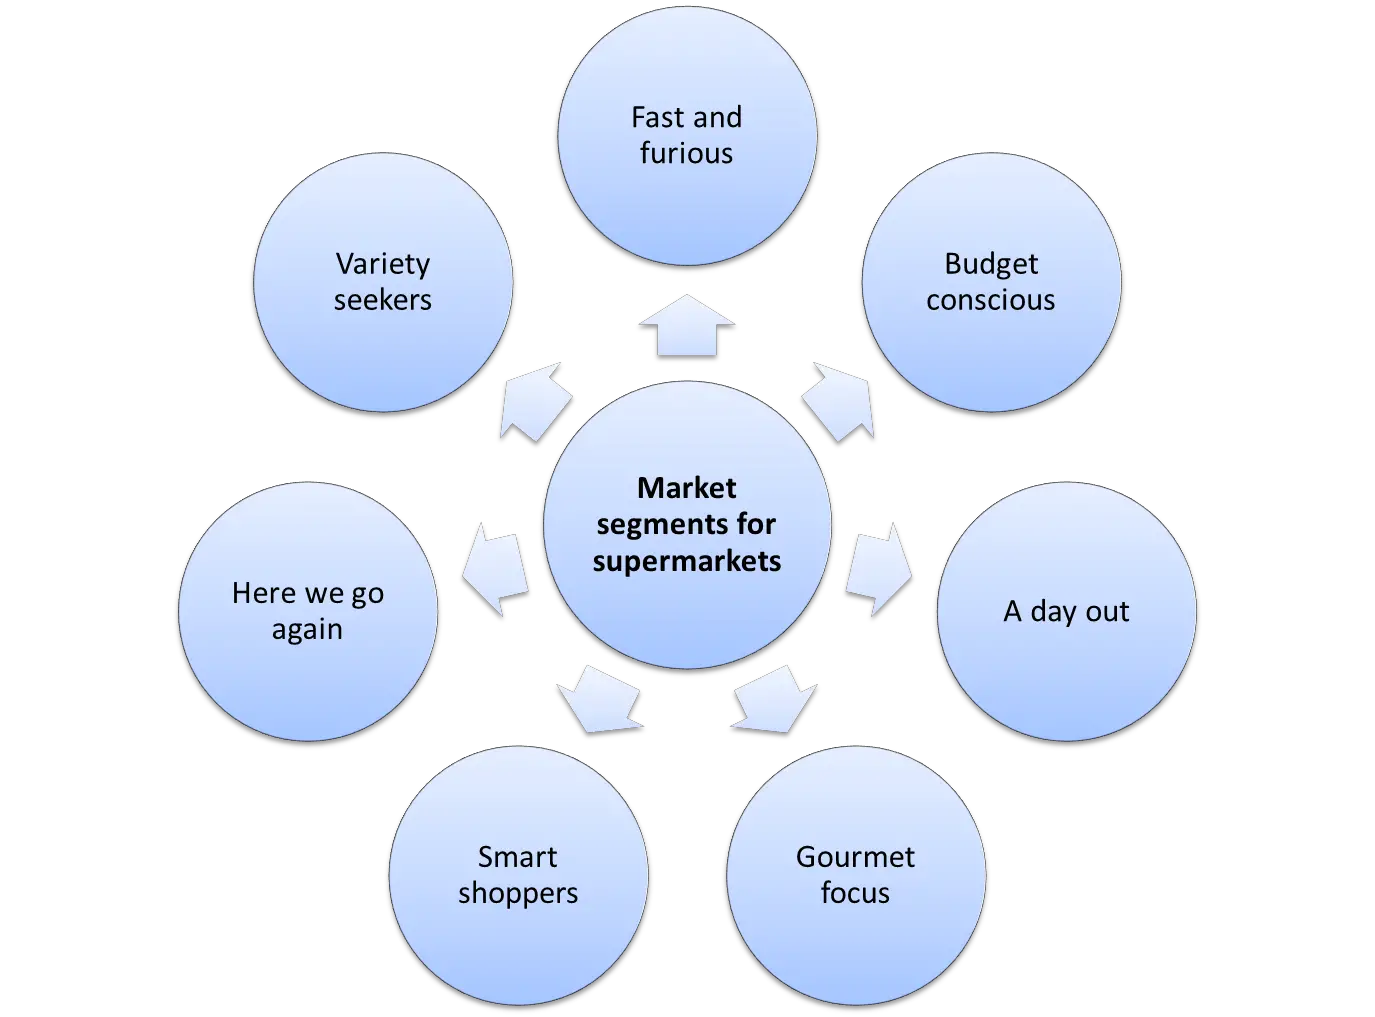 Marketing and segment